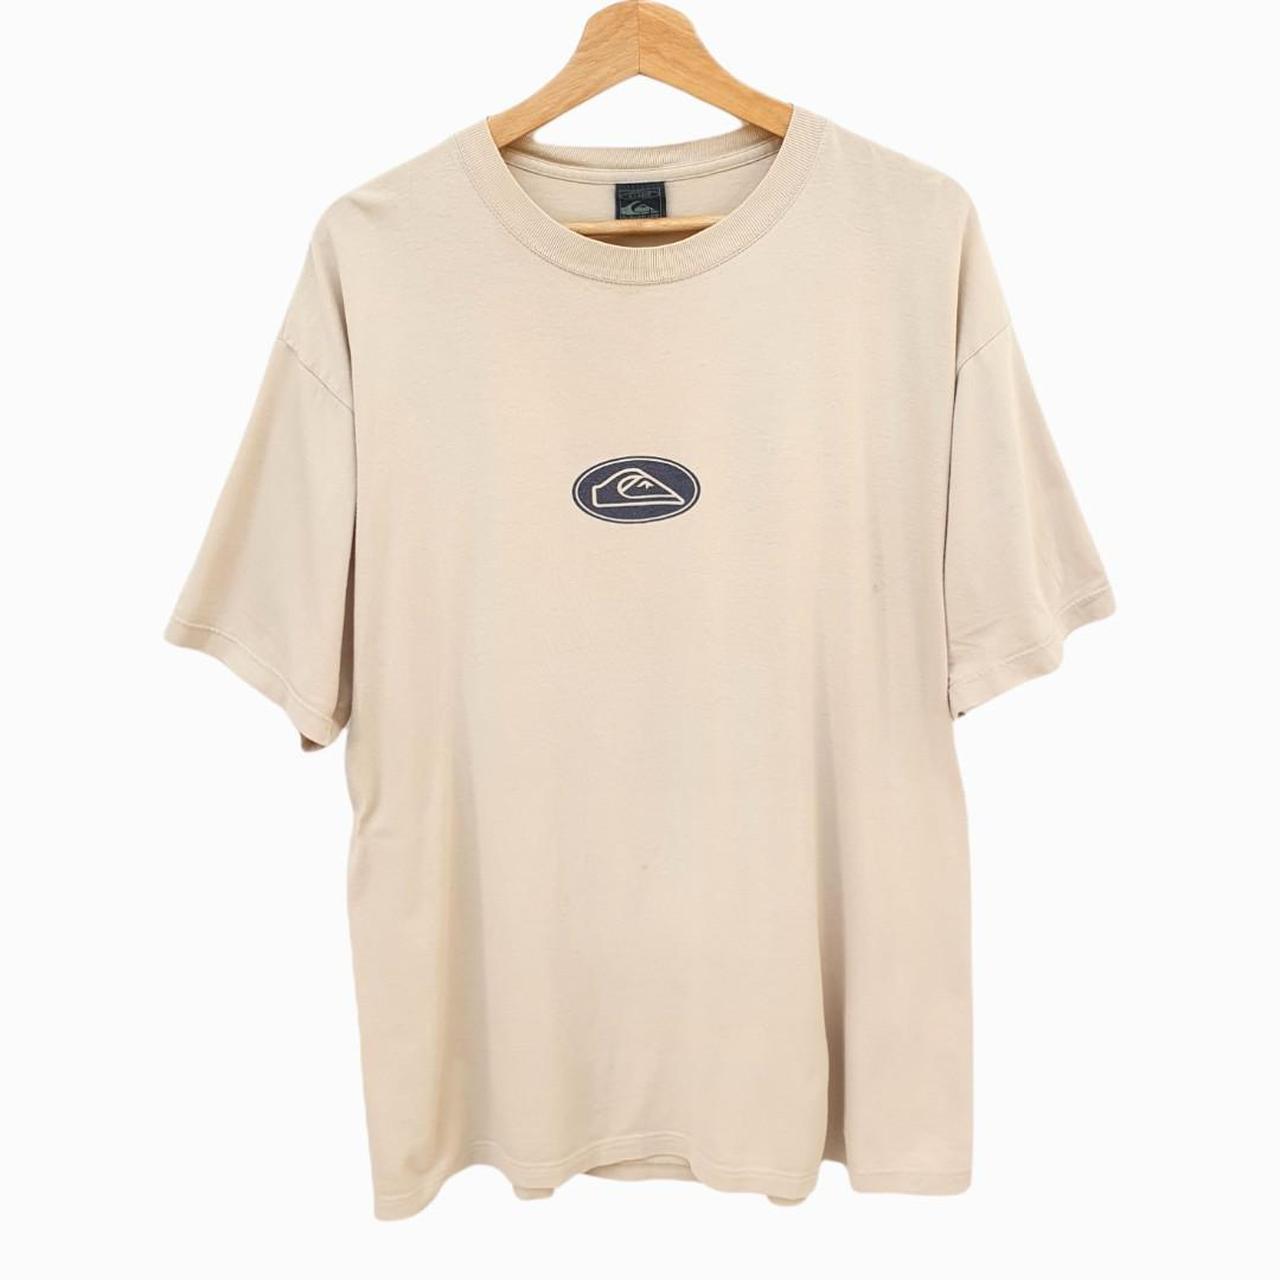 Men's Vintage Quicksilver Beige T-Shirt hirt - Made... - Depop